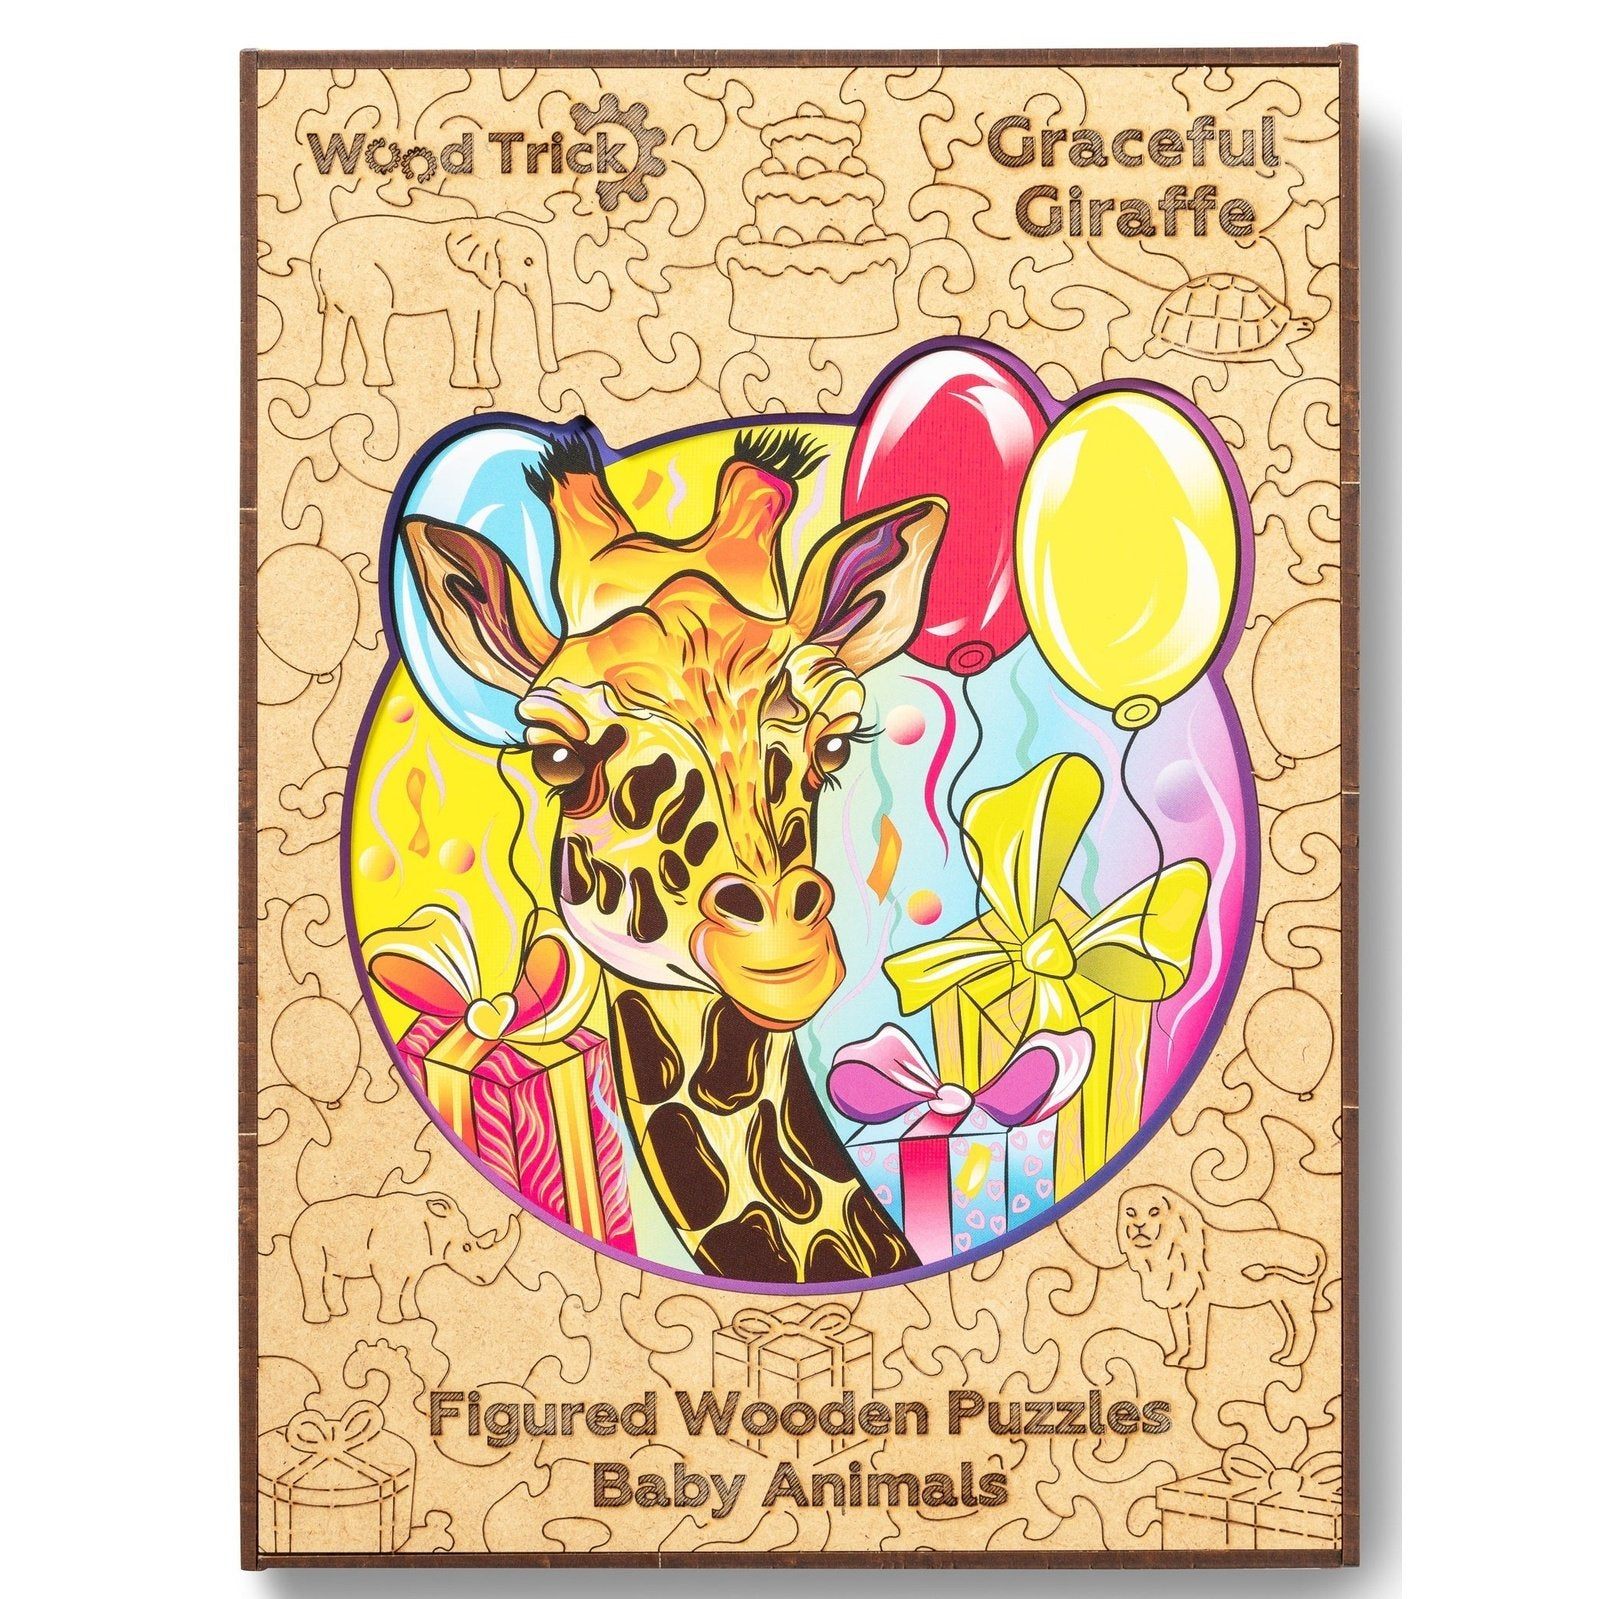 Wood Trick Sierlijke Giraffe Houten Vormpuzzel 24x23 cm - 110 stukjes